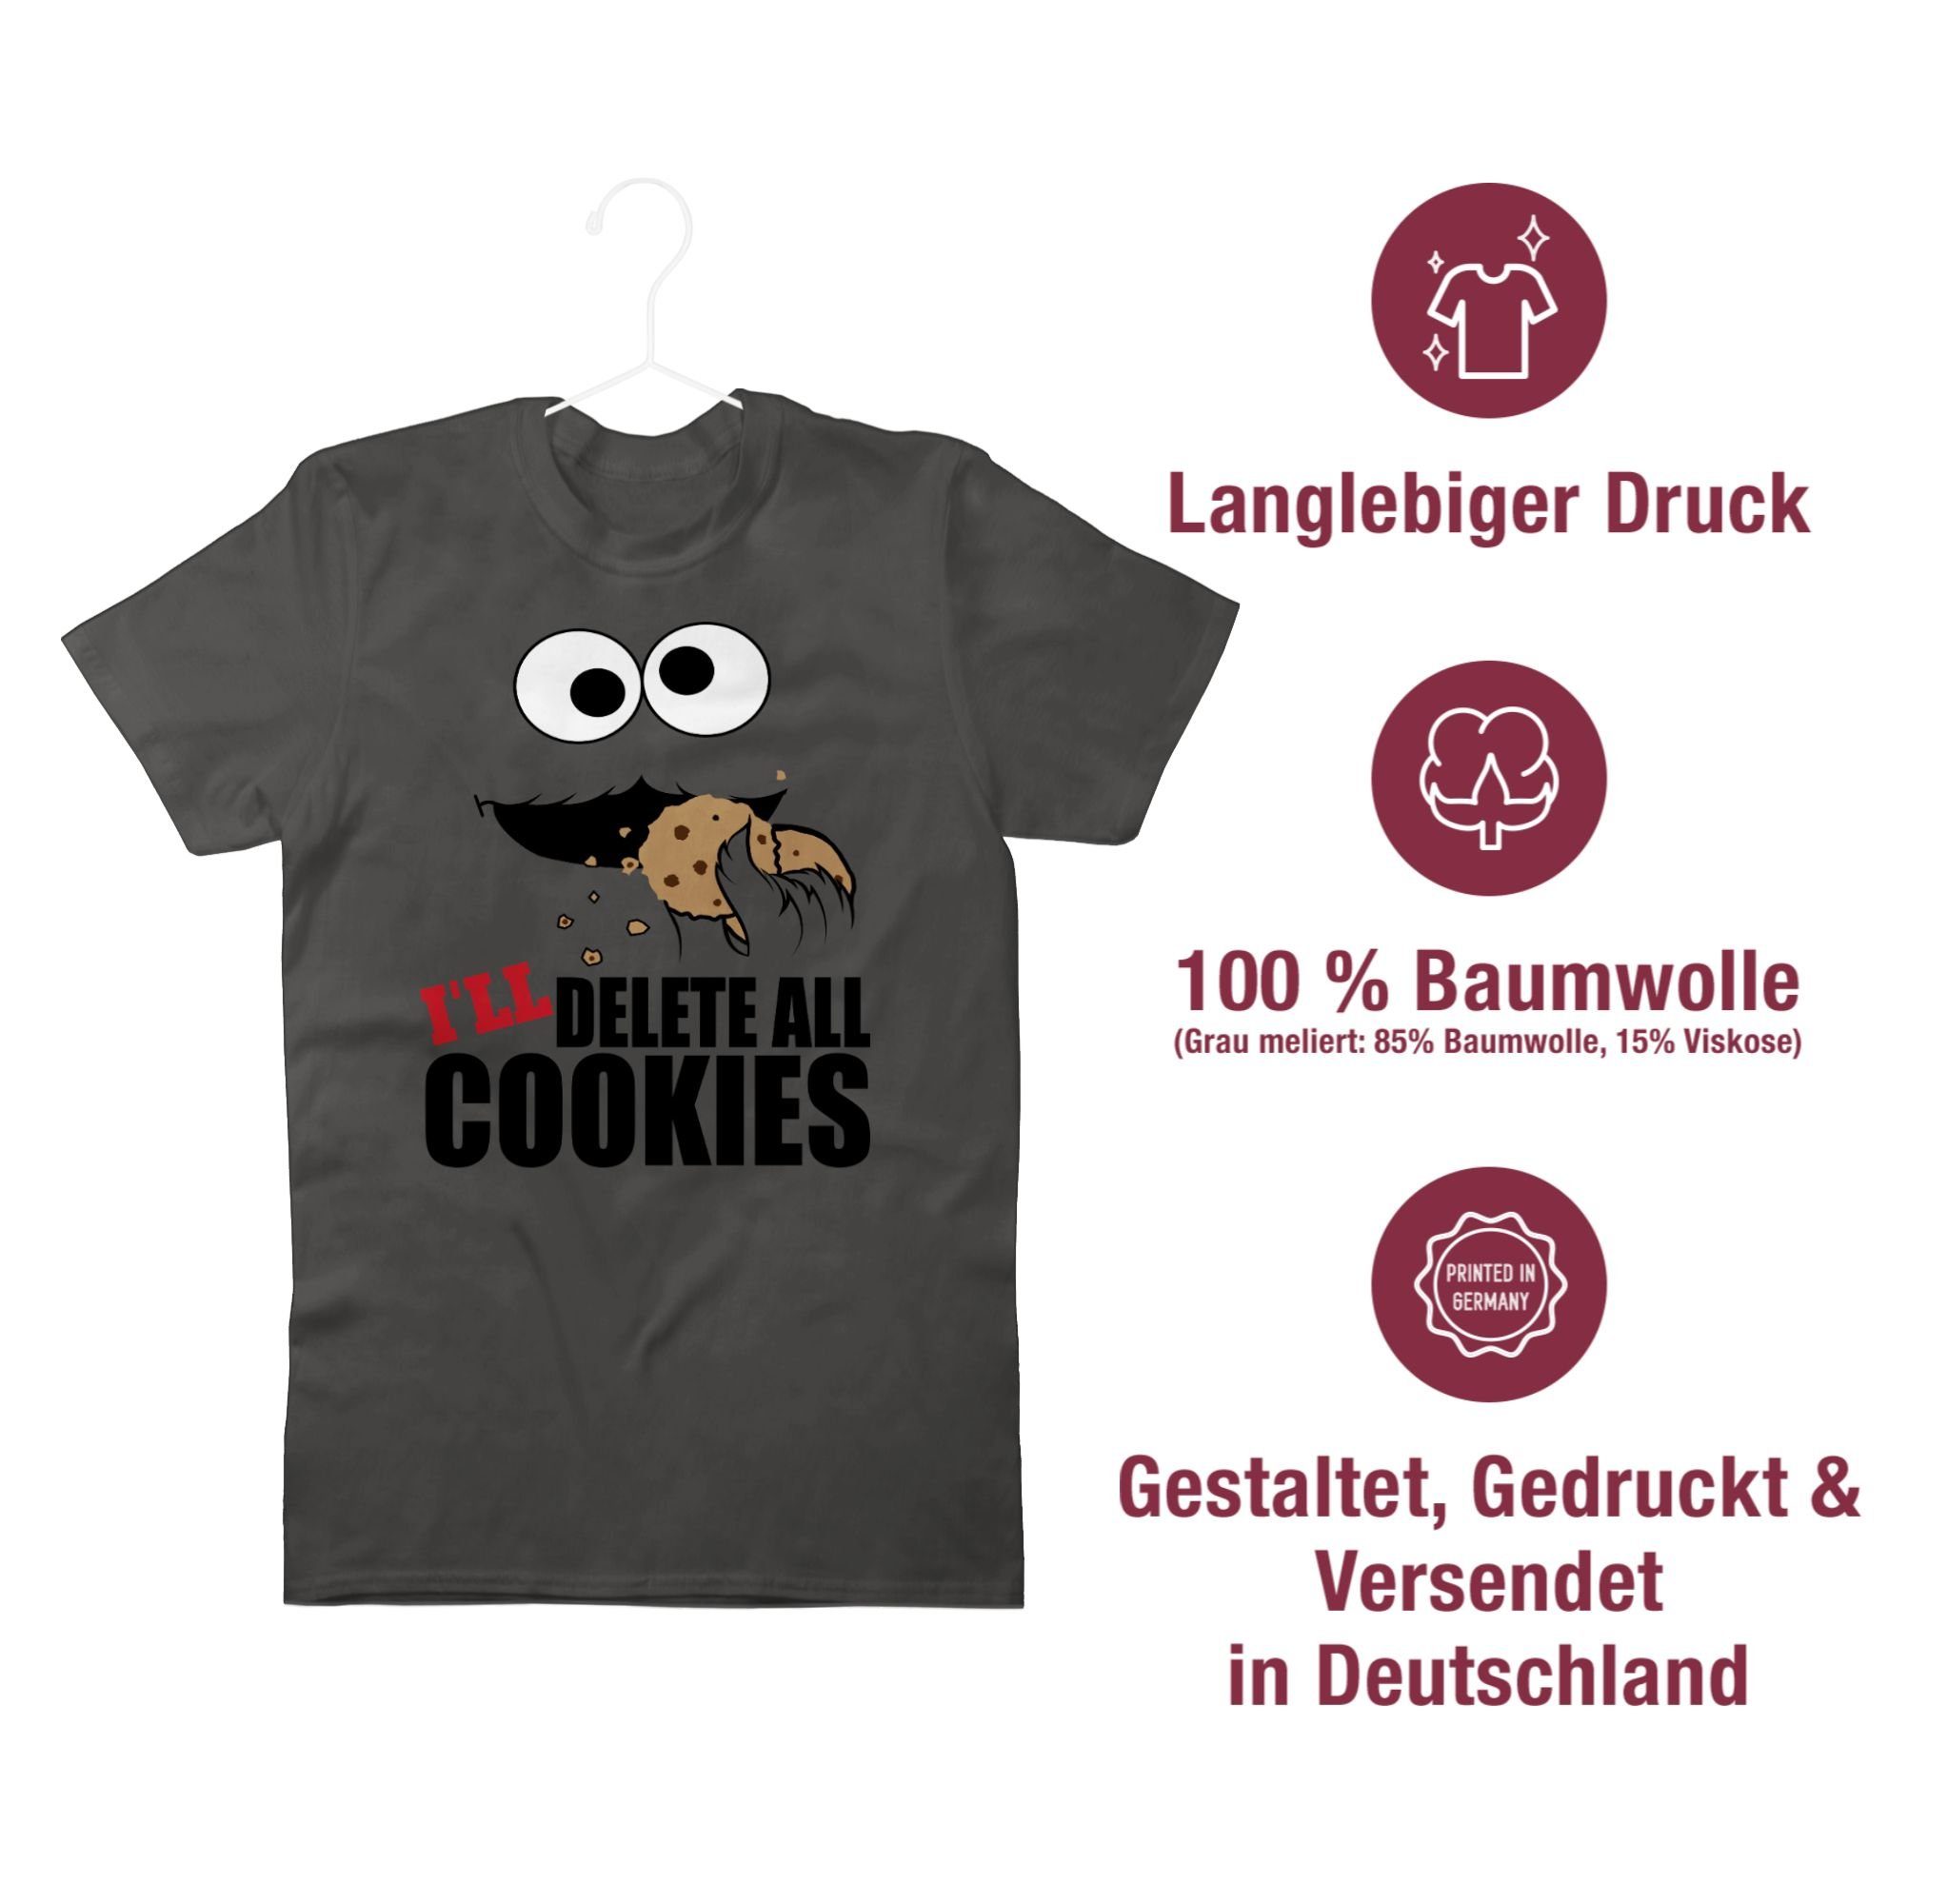 Keks-Monster will 2 Nerd cookies delete I all Geschenke T-Shirt Dunkelgrau Shirtracer